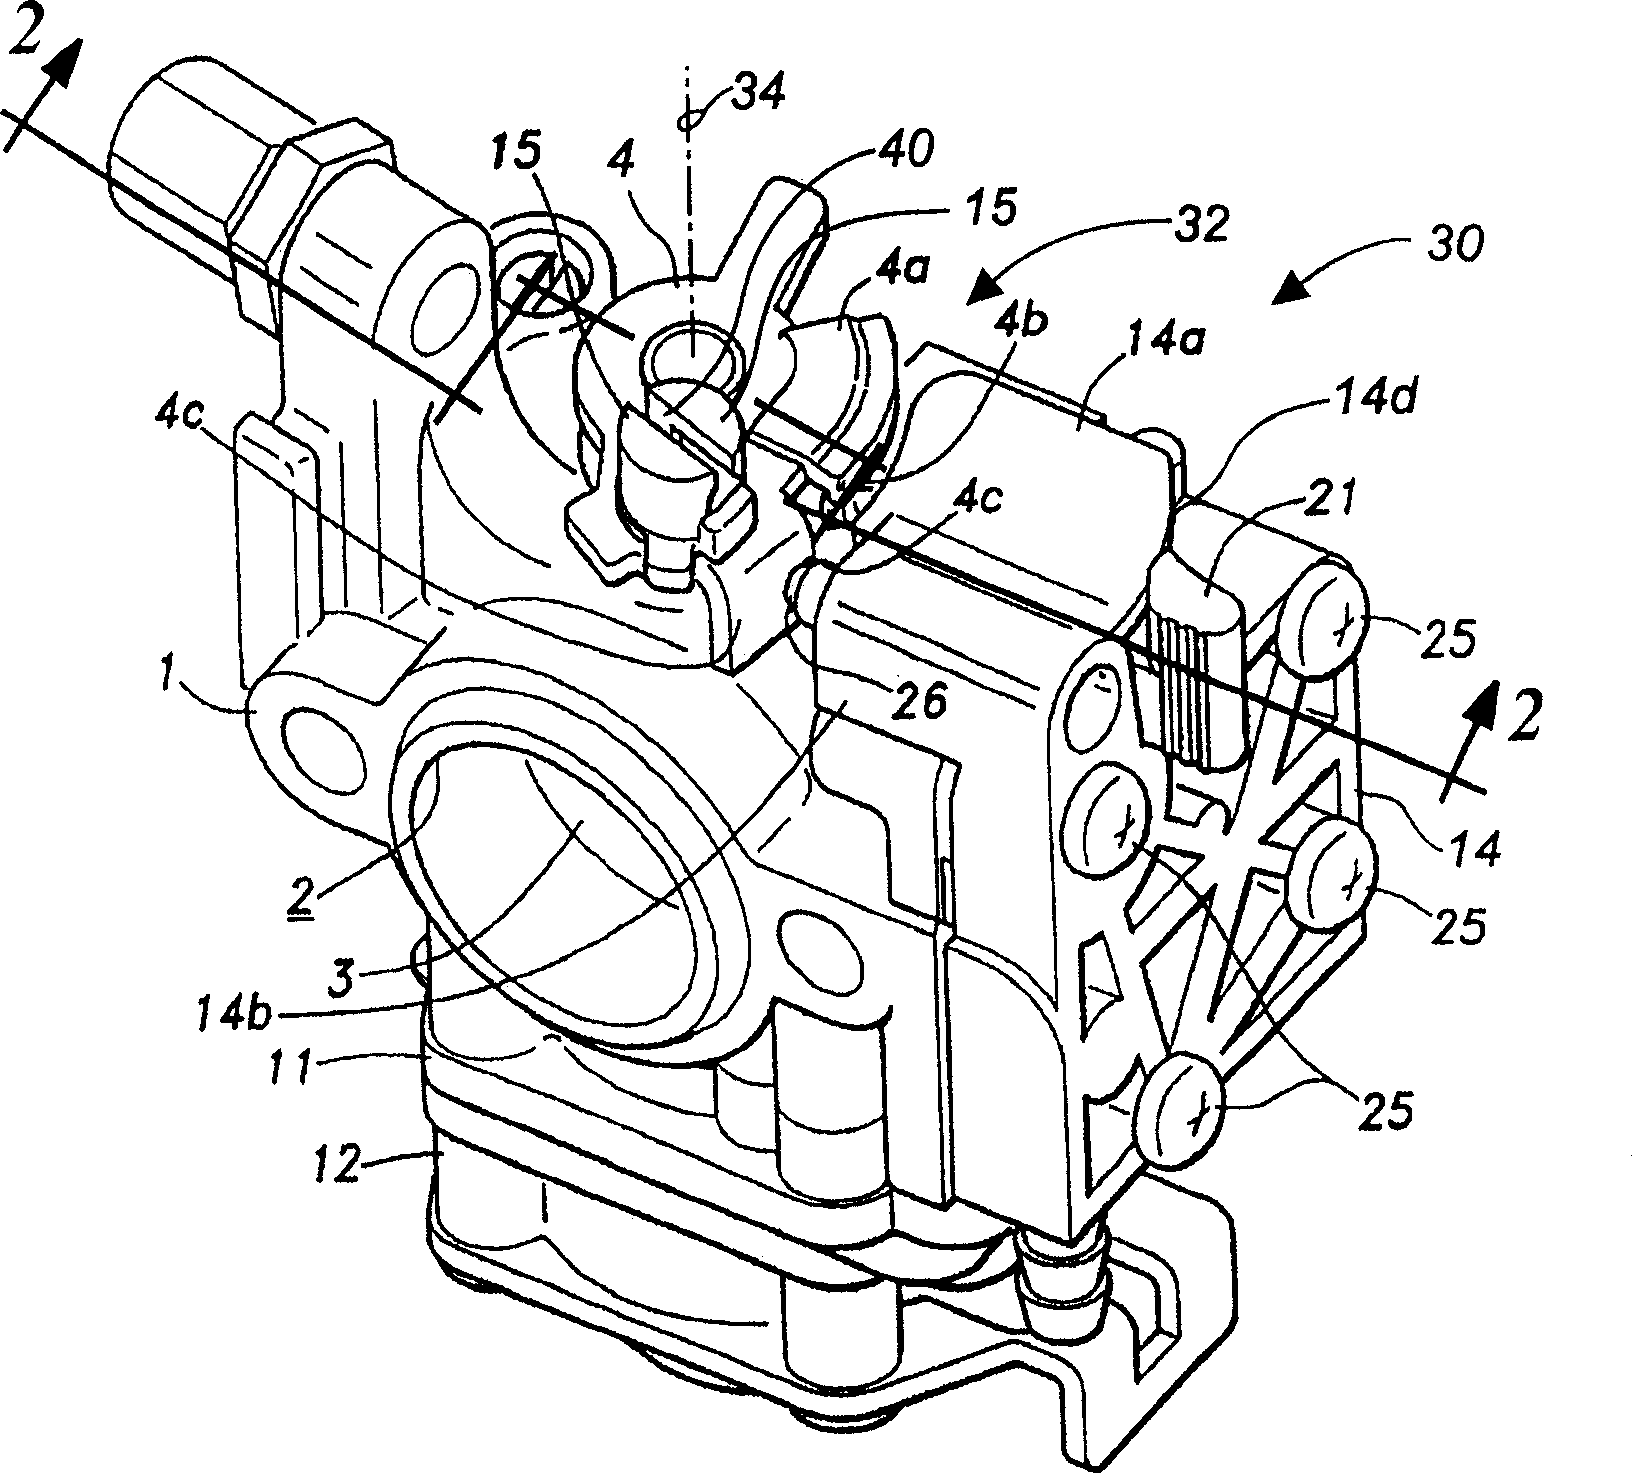 Engine start device of a rotary valve carburetor